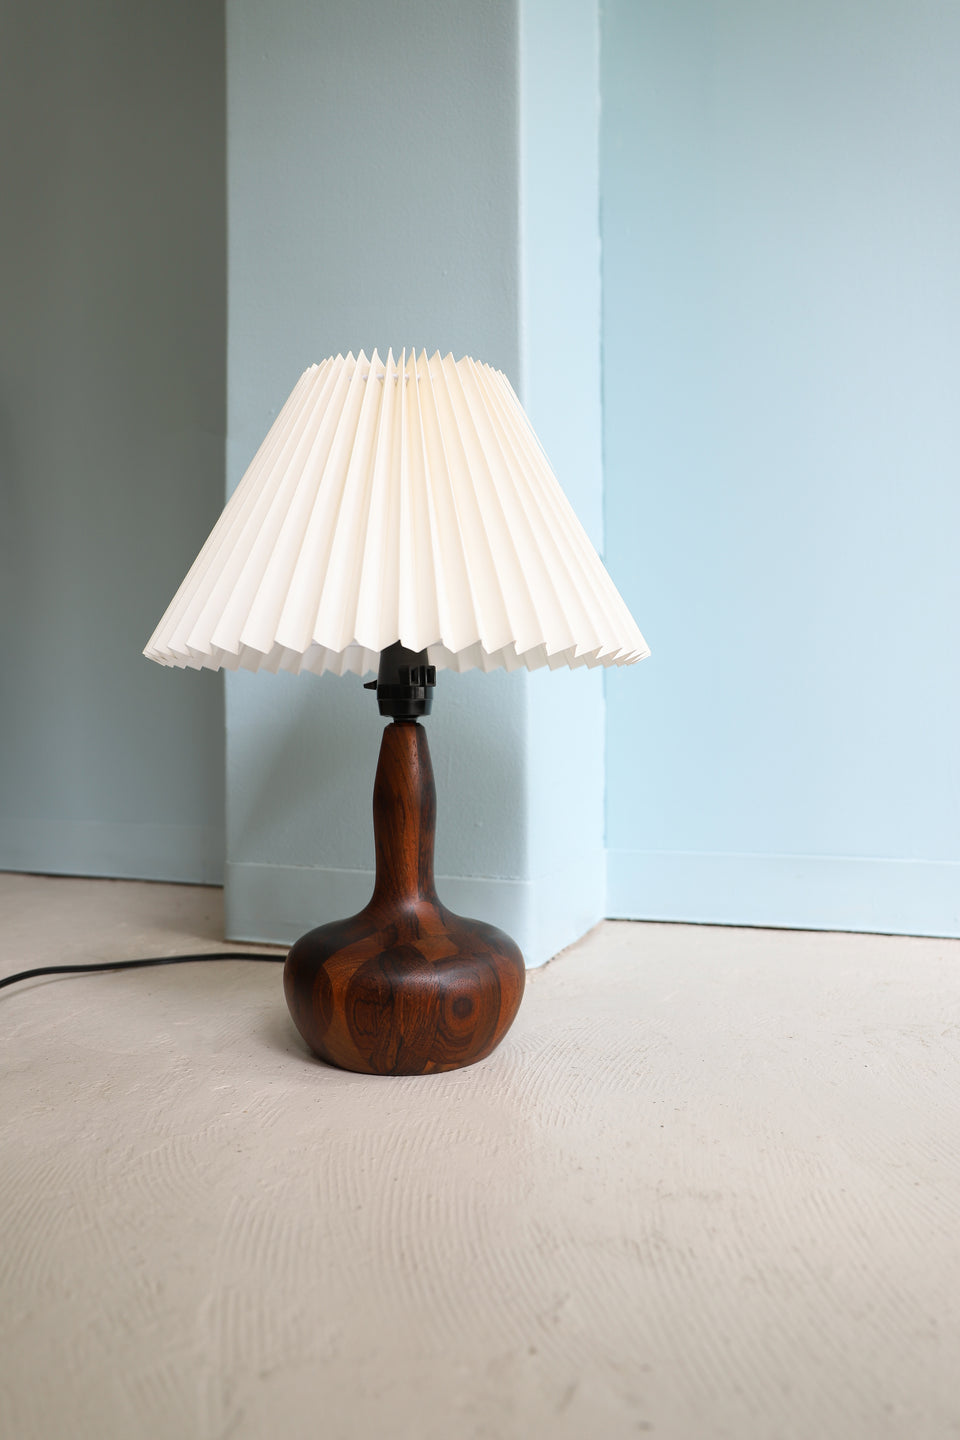 Danish Vintage Parquet Table Lamp Rosewood Teakwood/デンマークヴィンテージ テーブルランプ ローズウッド チーク材 寄木細工 間接照明 北欧インテリア